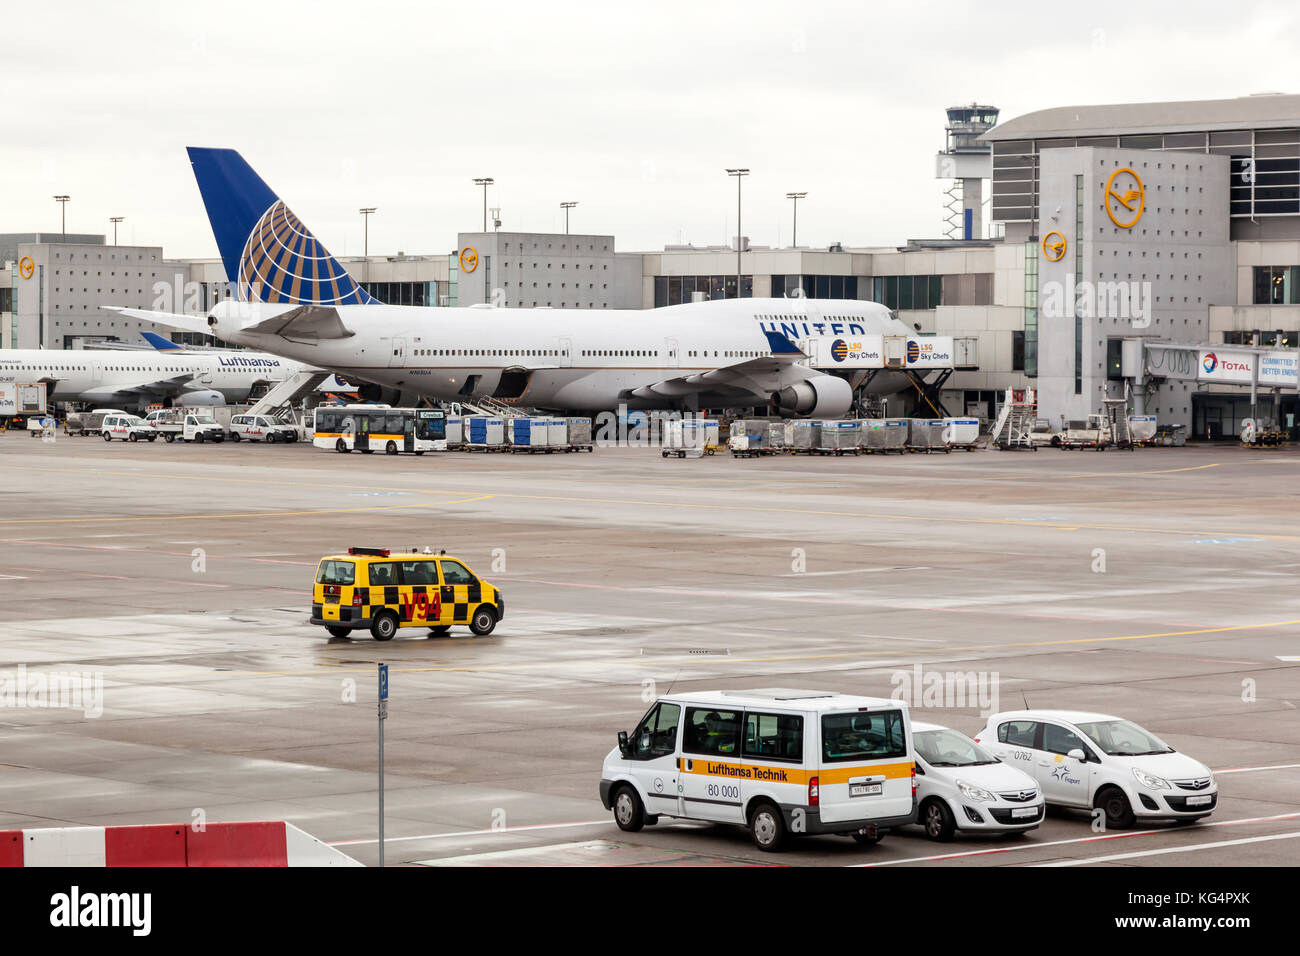 Francfort, Allemagne - 10 oct 2017 : United airlines Boeing 747-451 à l'entrée de l'aéroport international de Francfort en Allemagne Banque D'Images